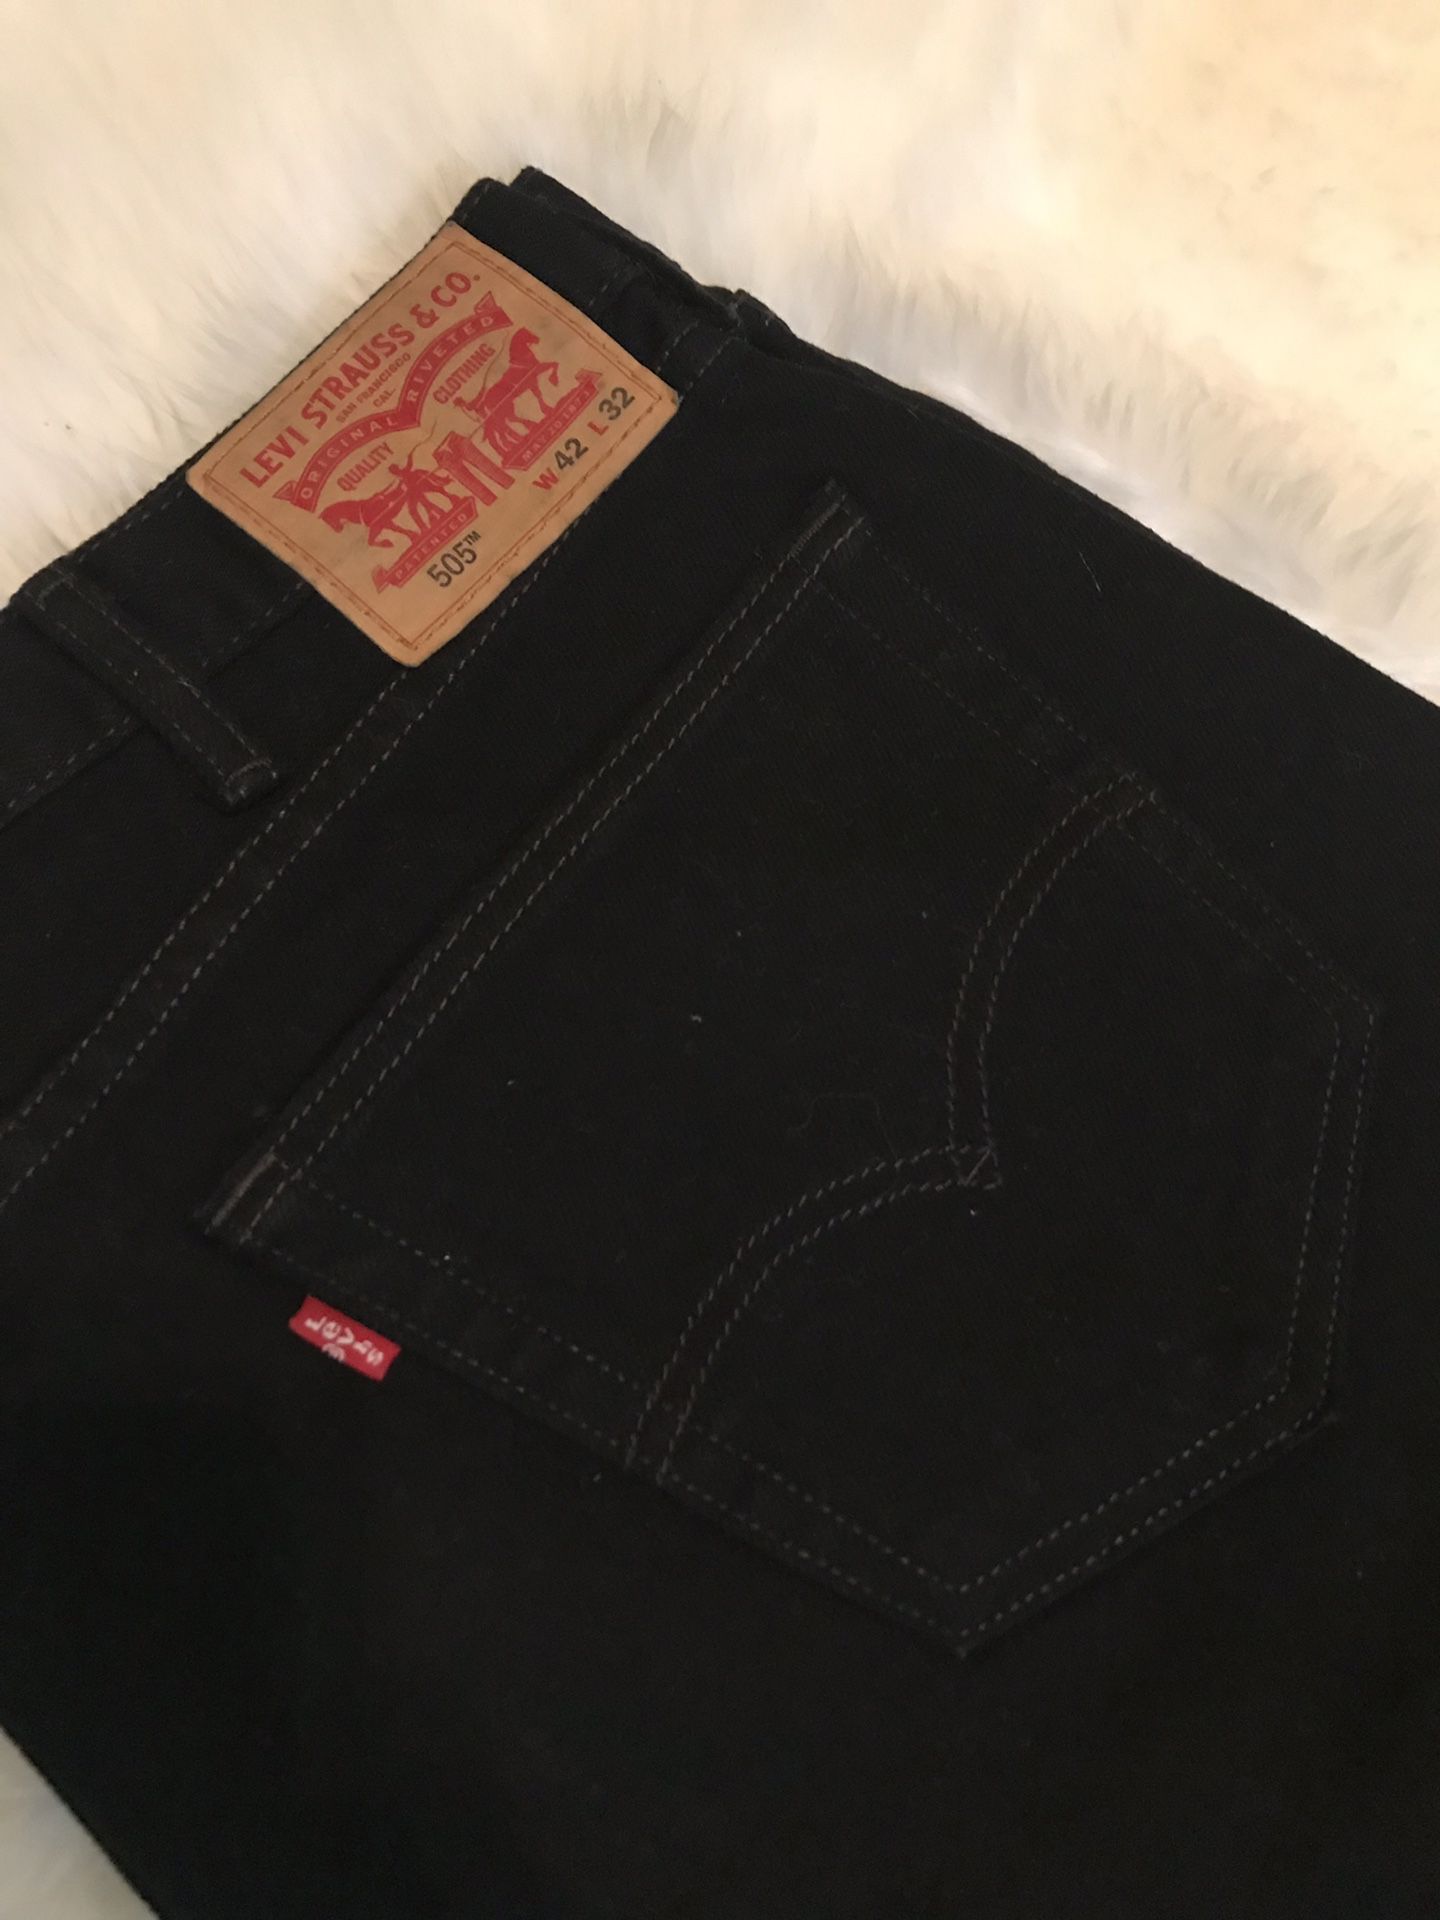 Black Levi’s Jeans 505’s